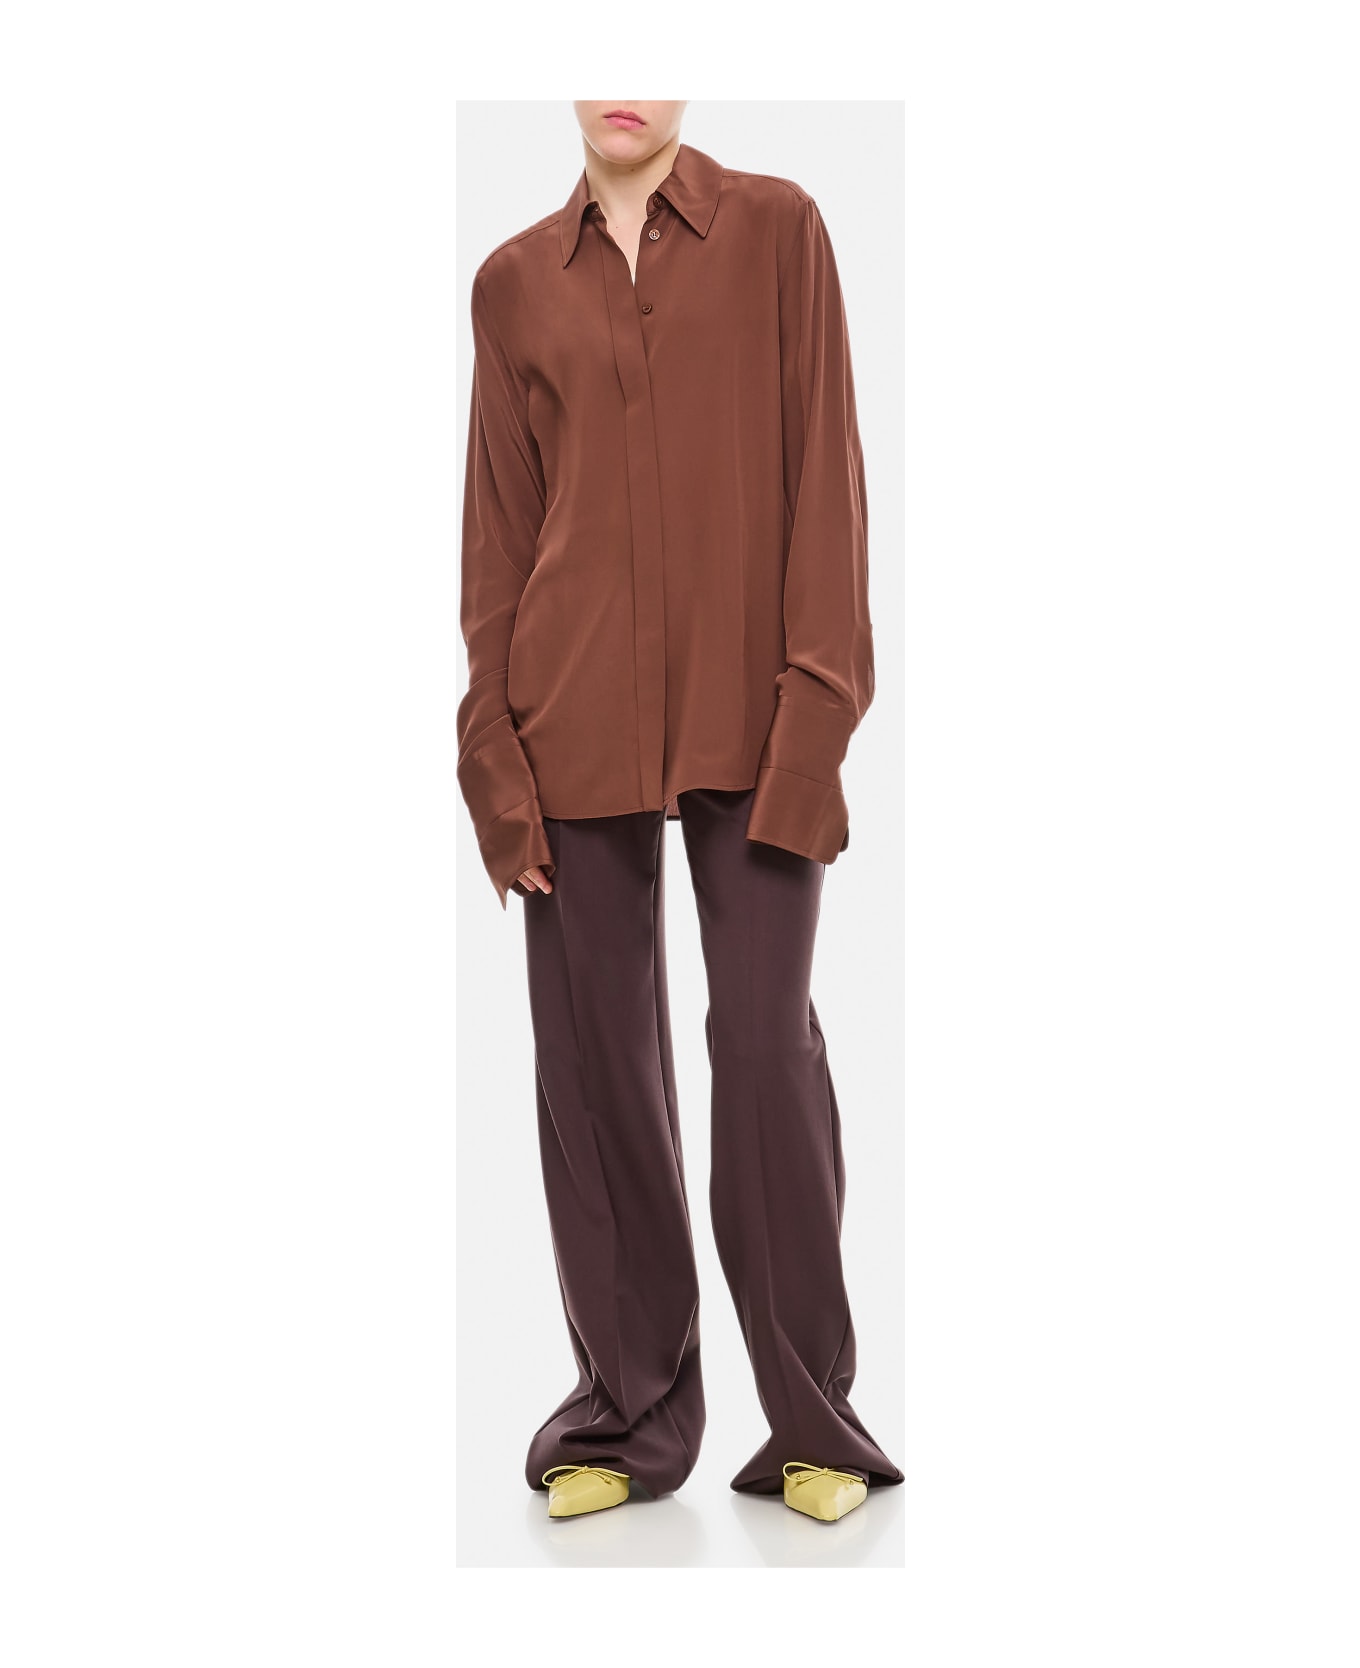 SportMax Leila Long Sleeve Shirt - Brown